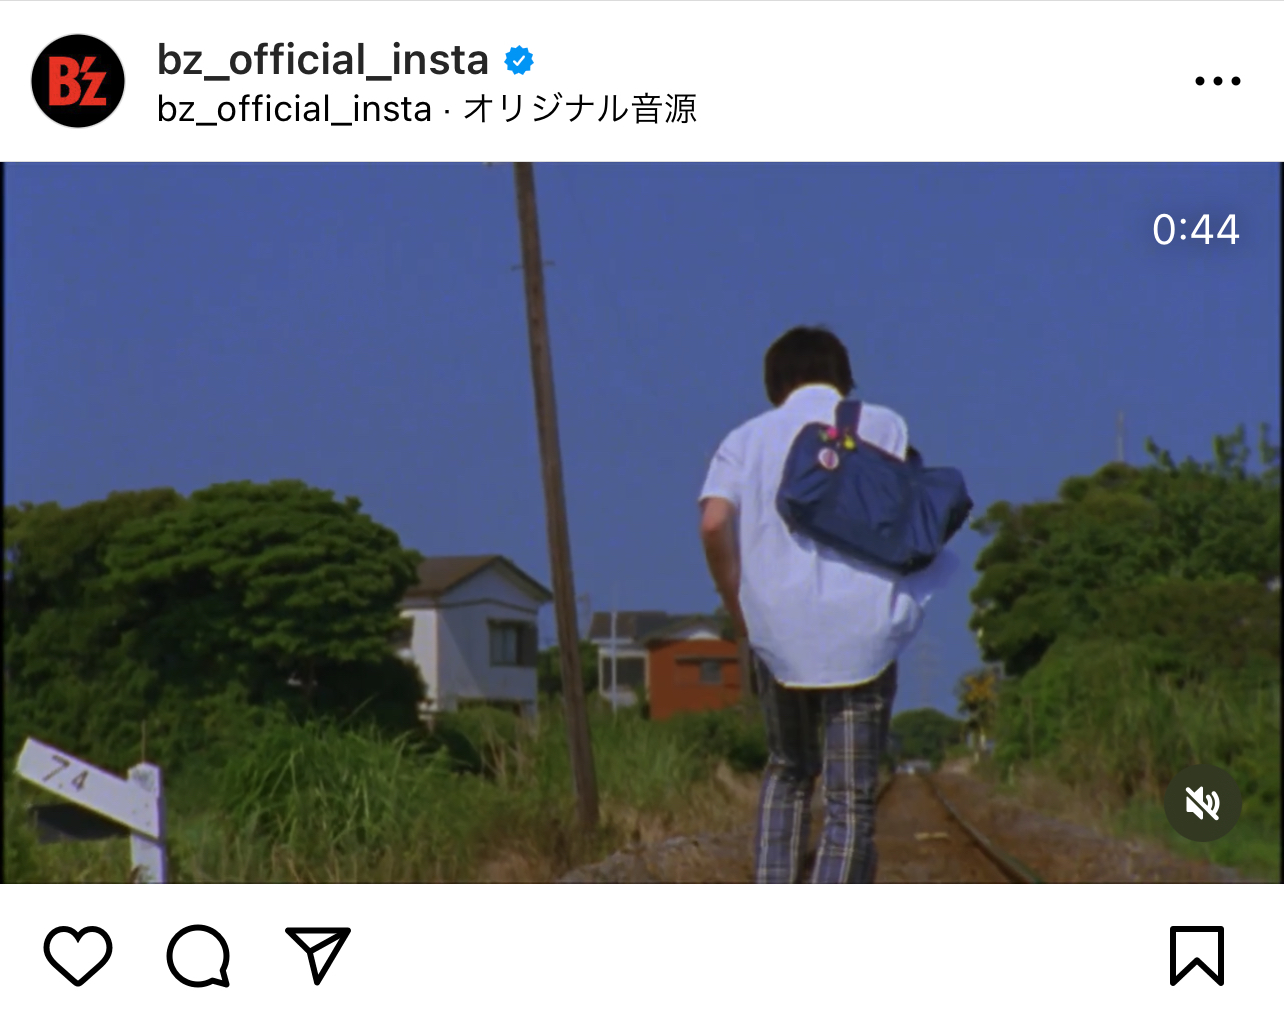 B'z公式Instagramに投稿された「ARIGATO」のミュージック・ビデオ